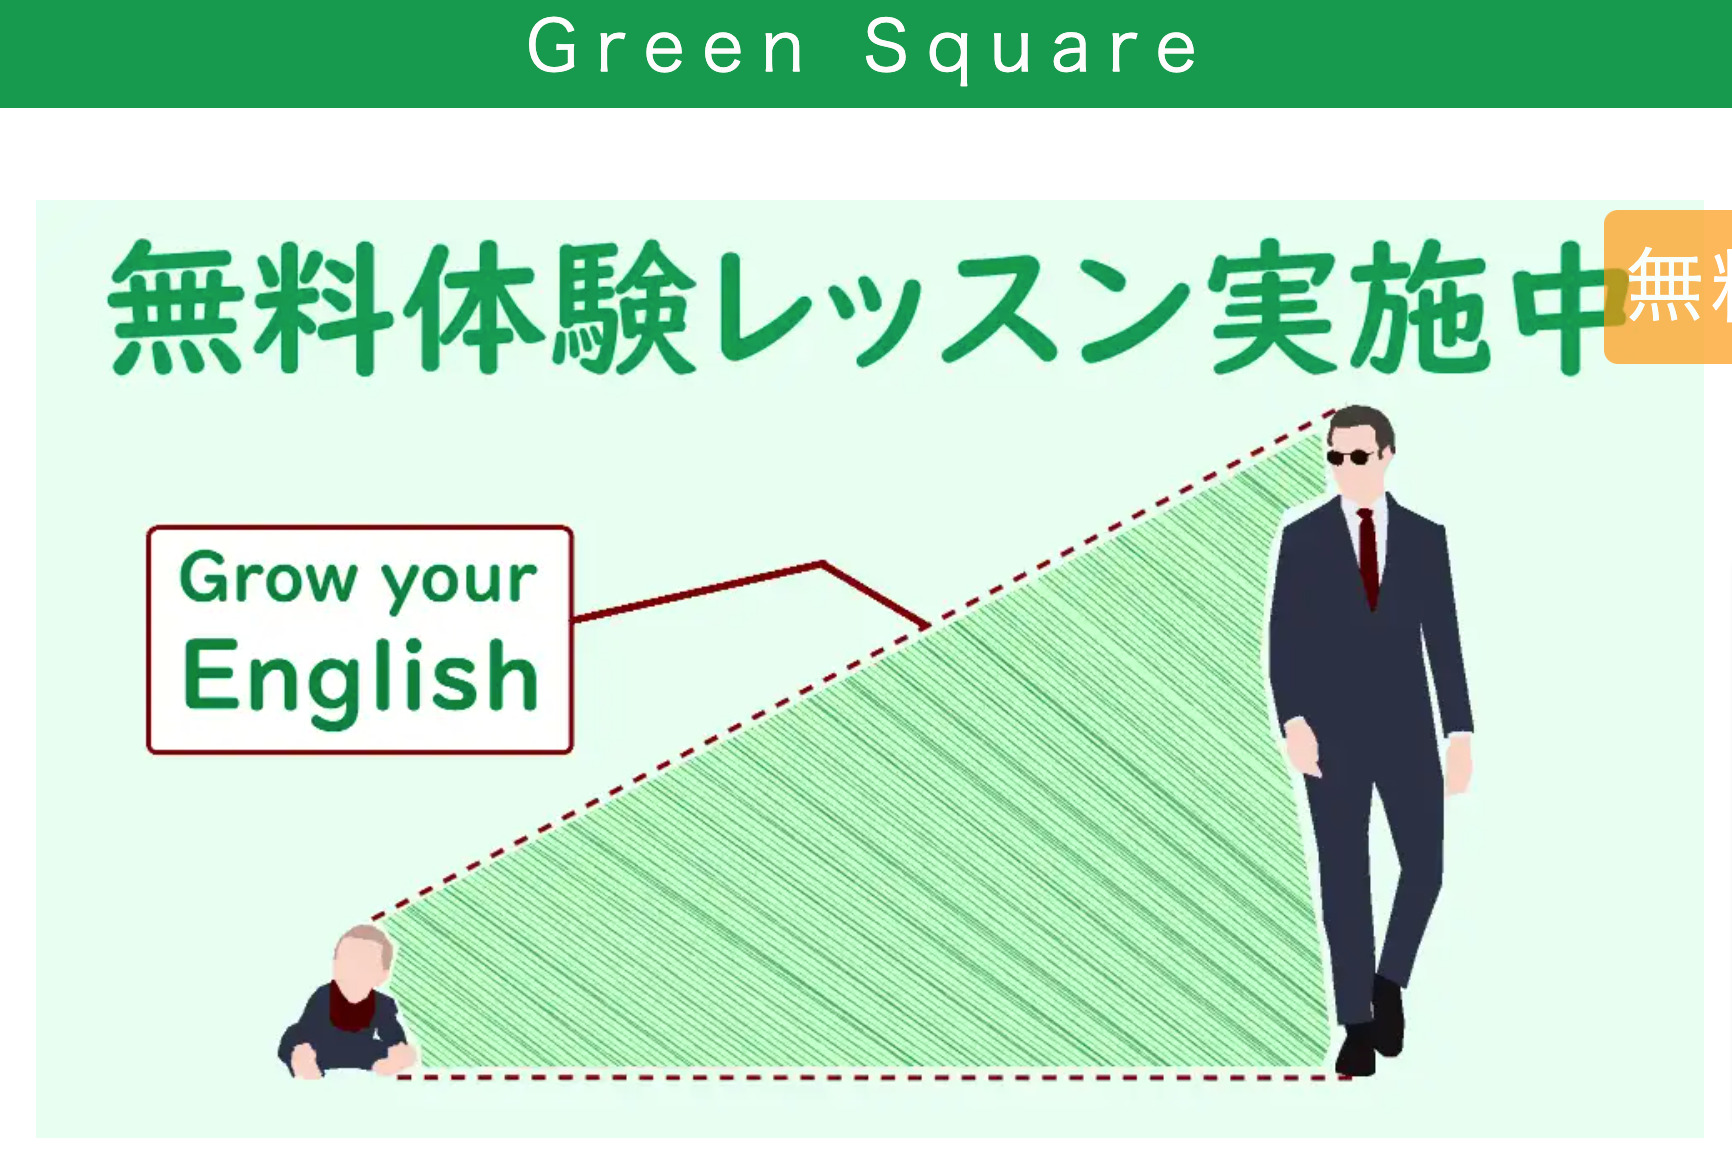 2.Green Square【狛江駅から徒歩3分】